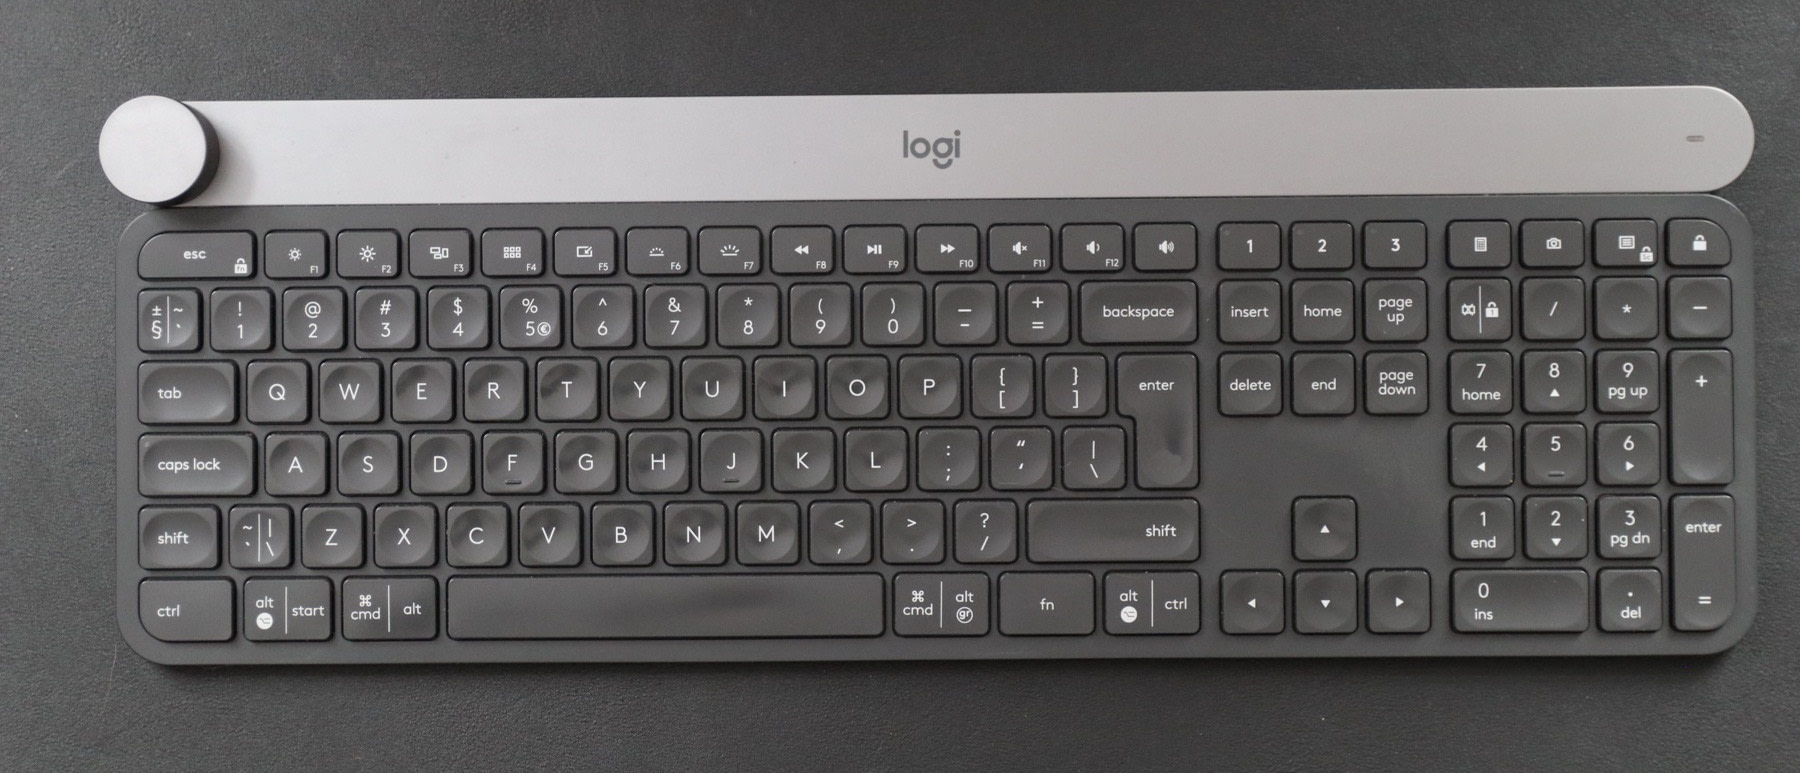 Usb Keyboard For Mac Laptop